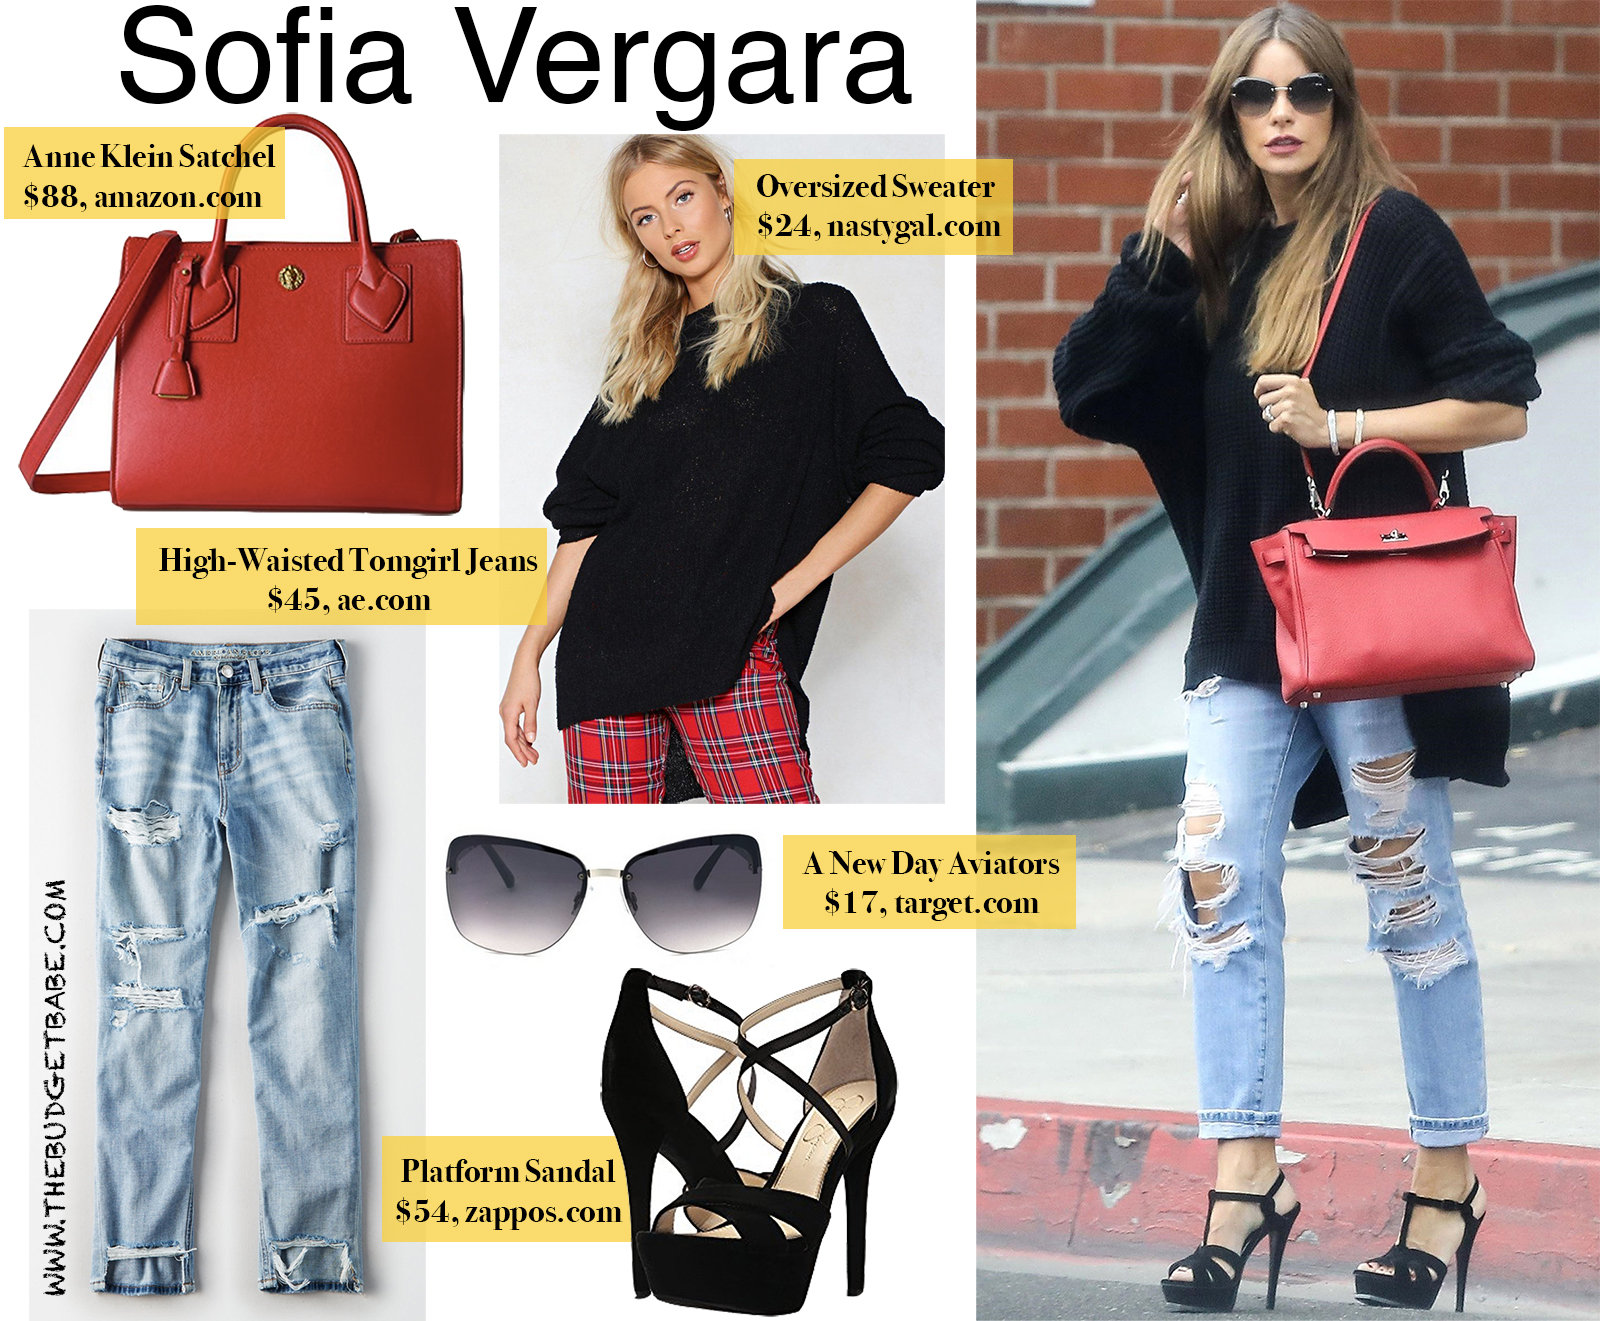 Sofia Vergara's Red Satchel & Stiletto Platform Sandal Look for Less